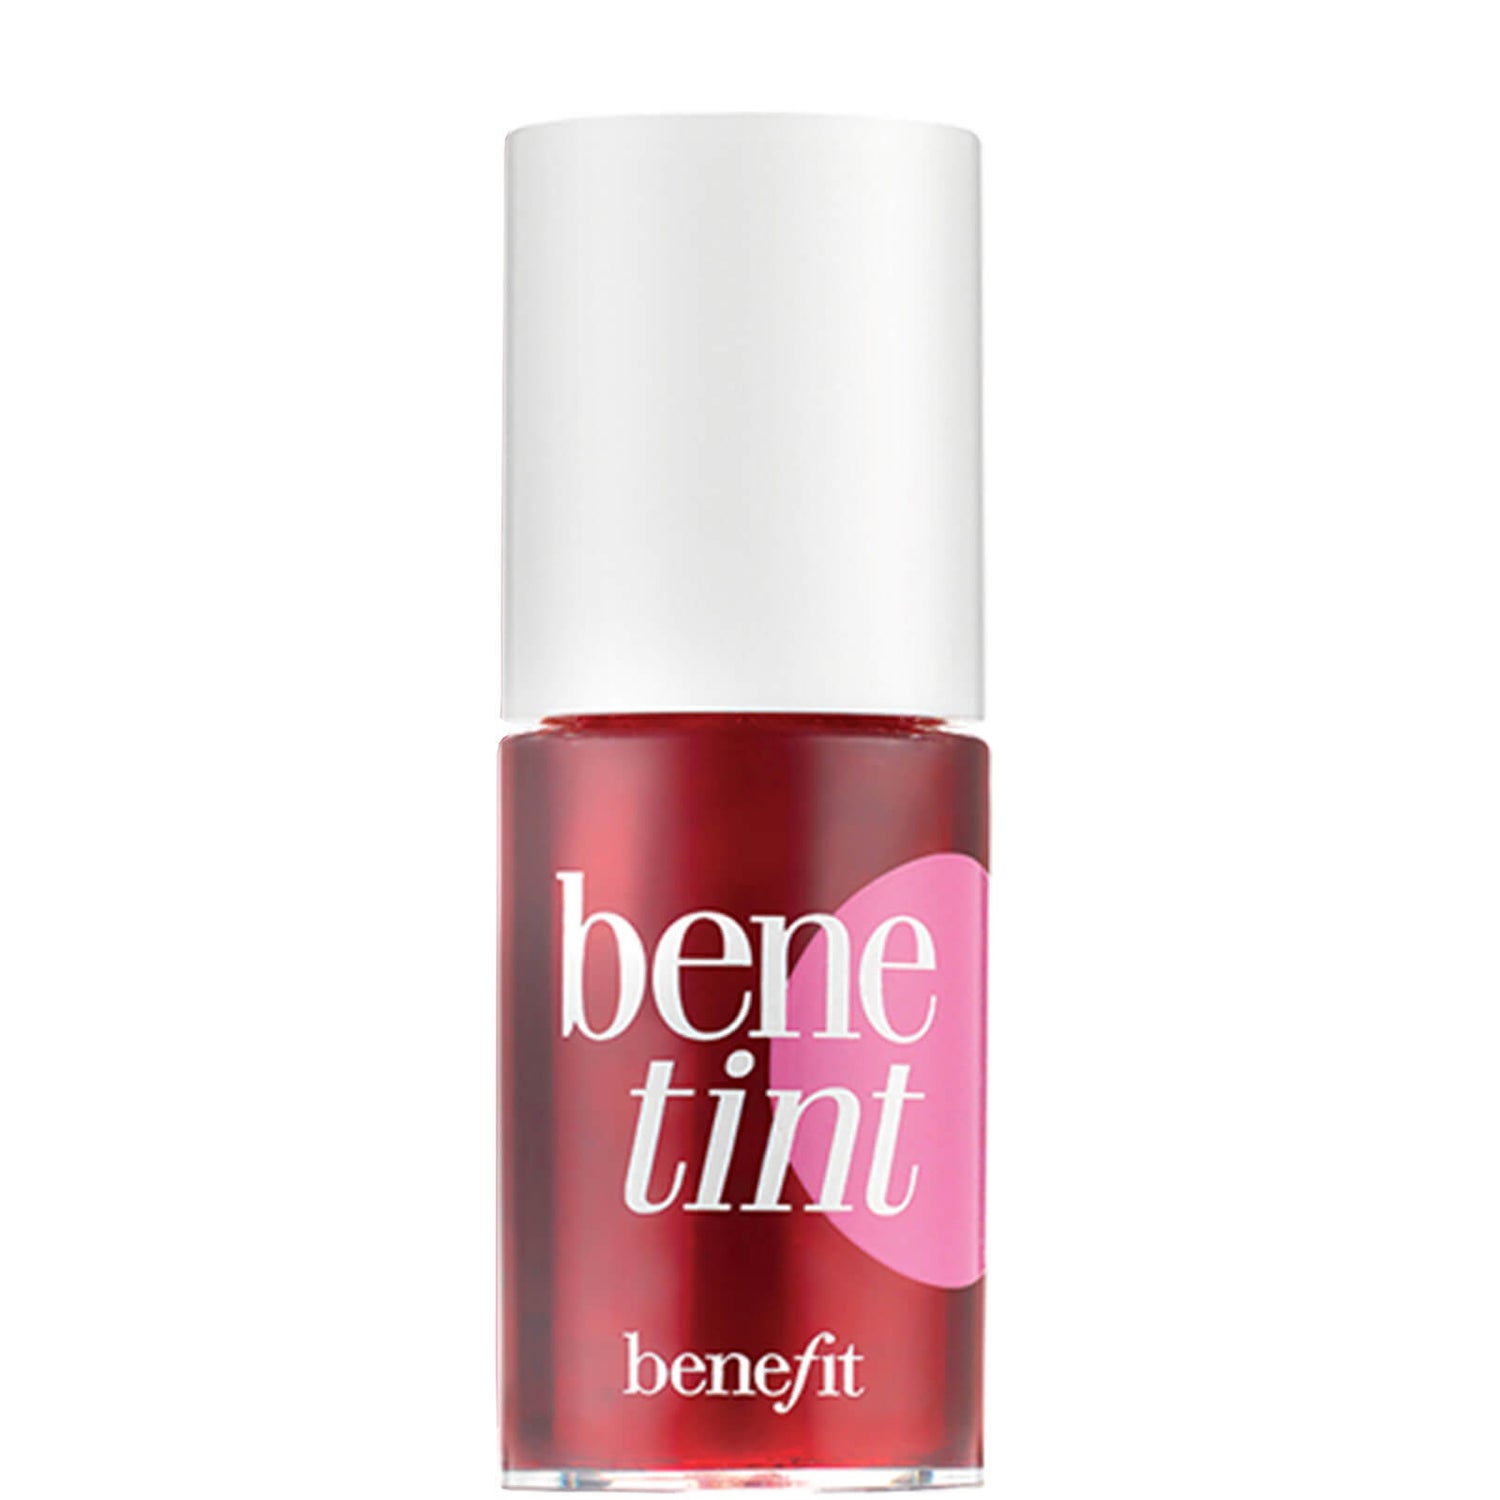 benefit Benetint Lip and Cheek Stain Mini